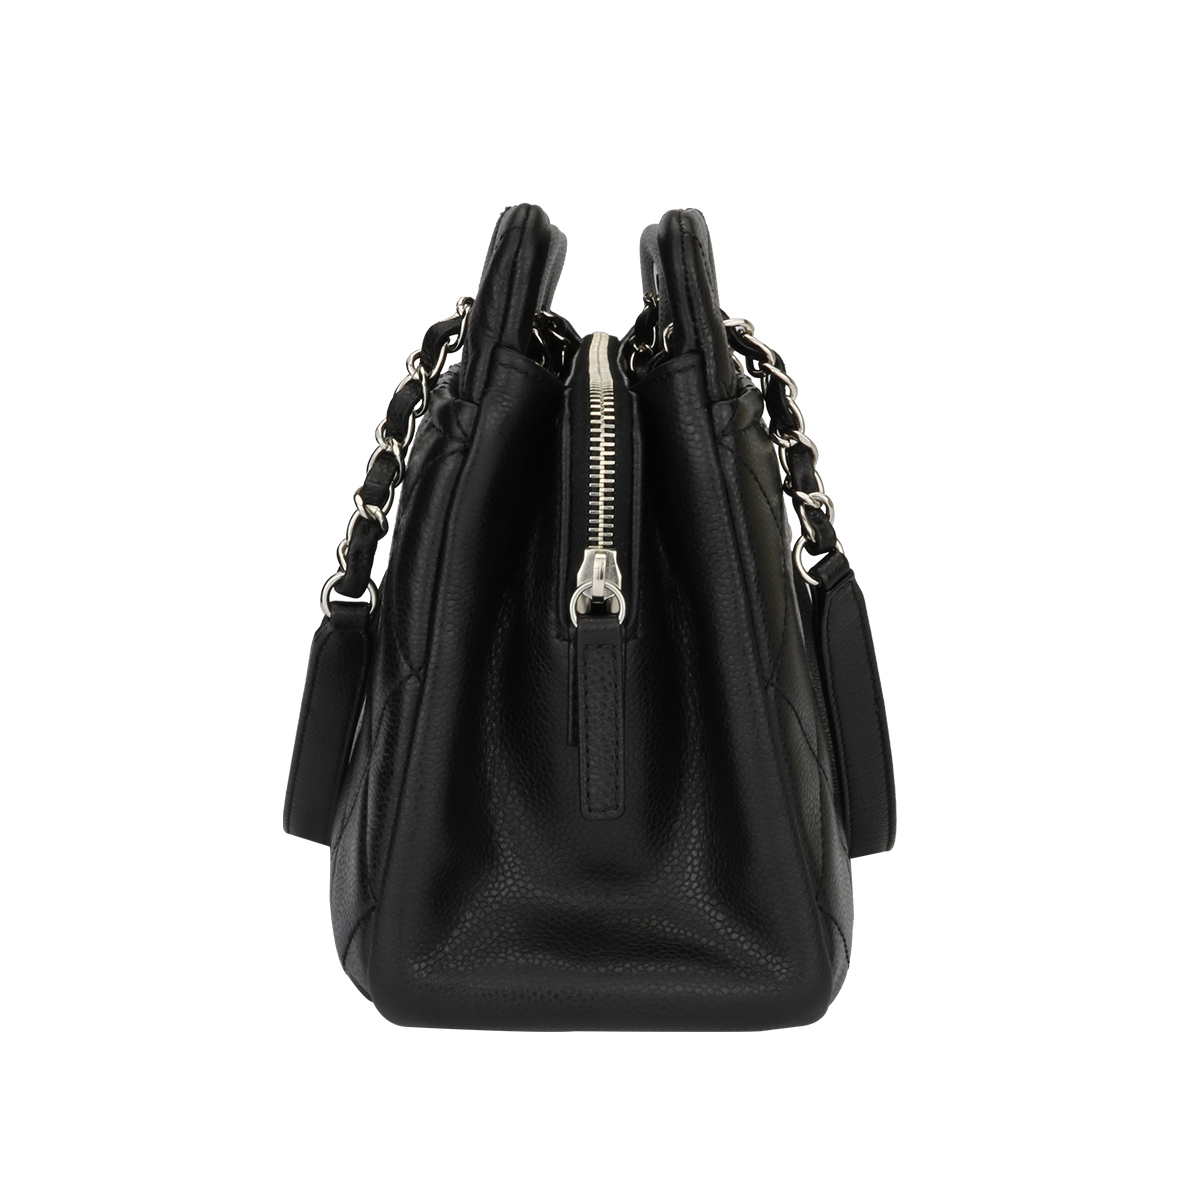 Chanel Large CC Day Tote - Black Totes, Handbags - CHA915241